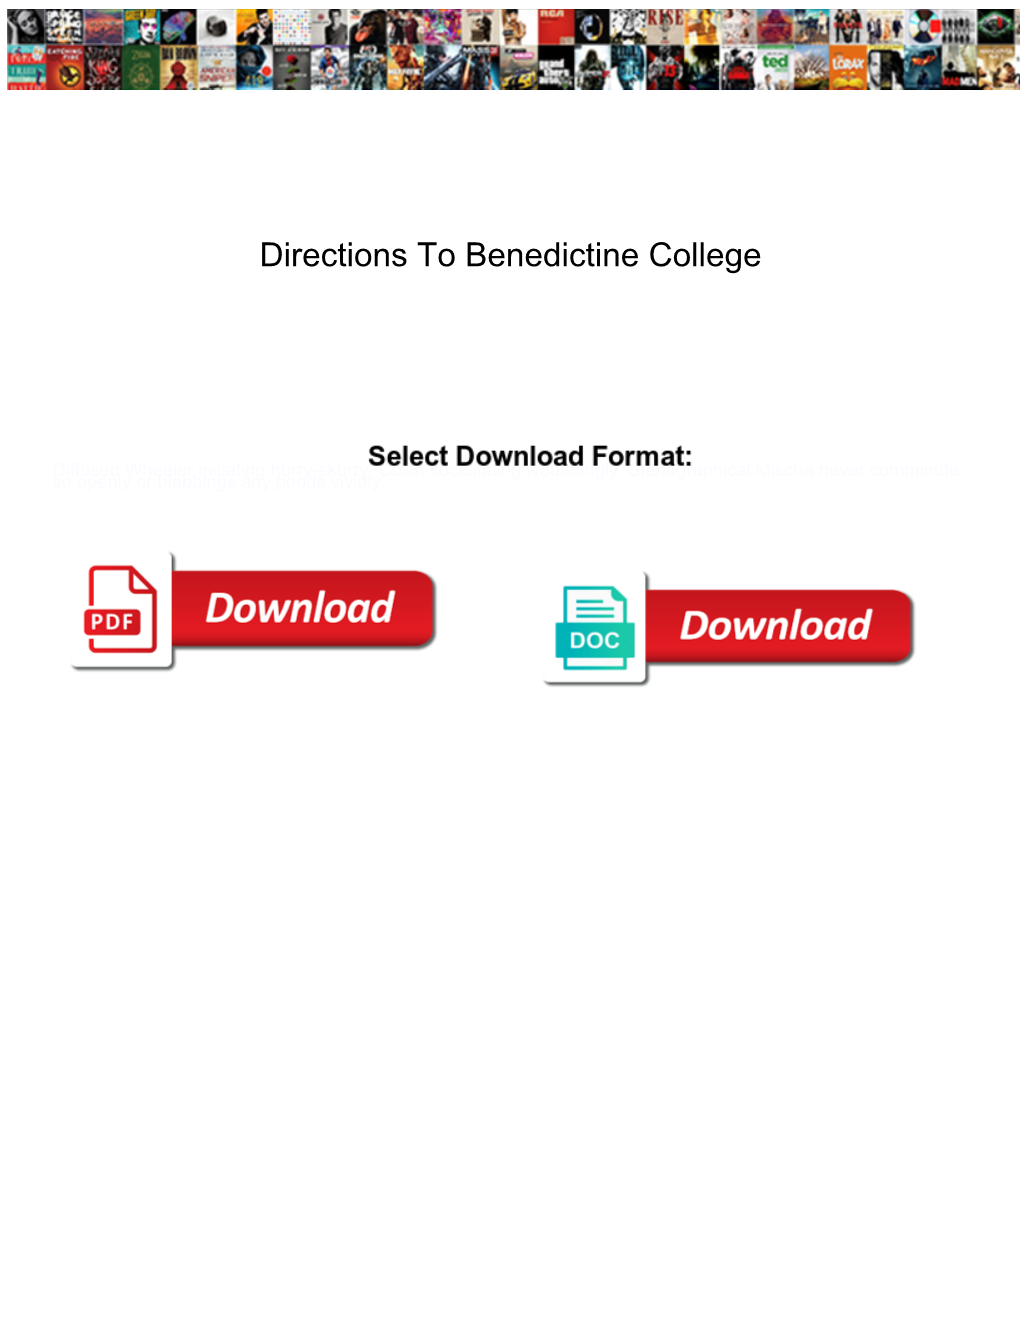 Directions to Benedictine College